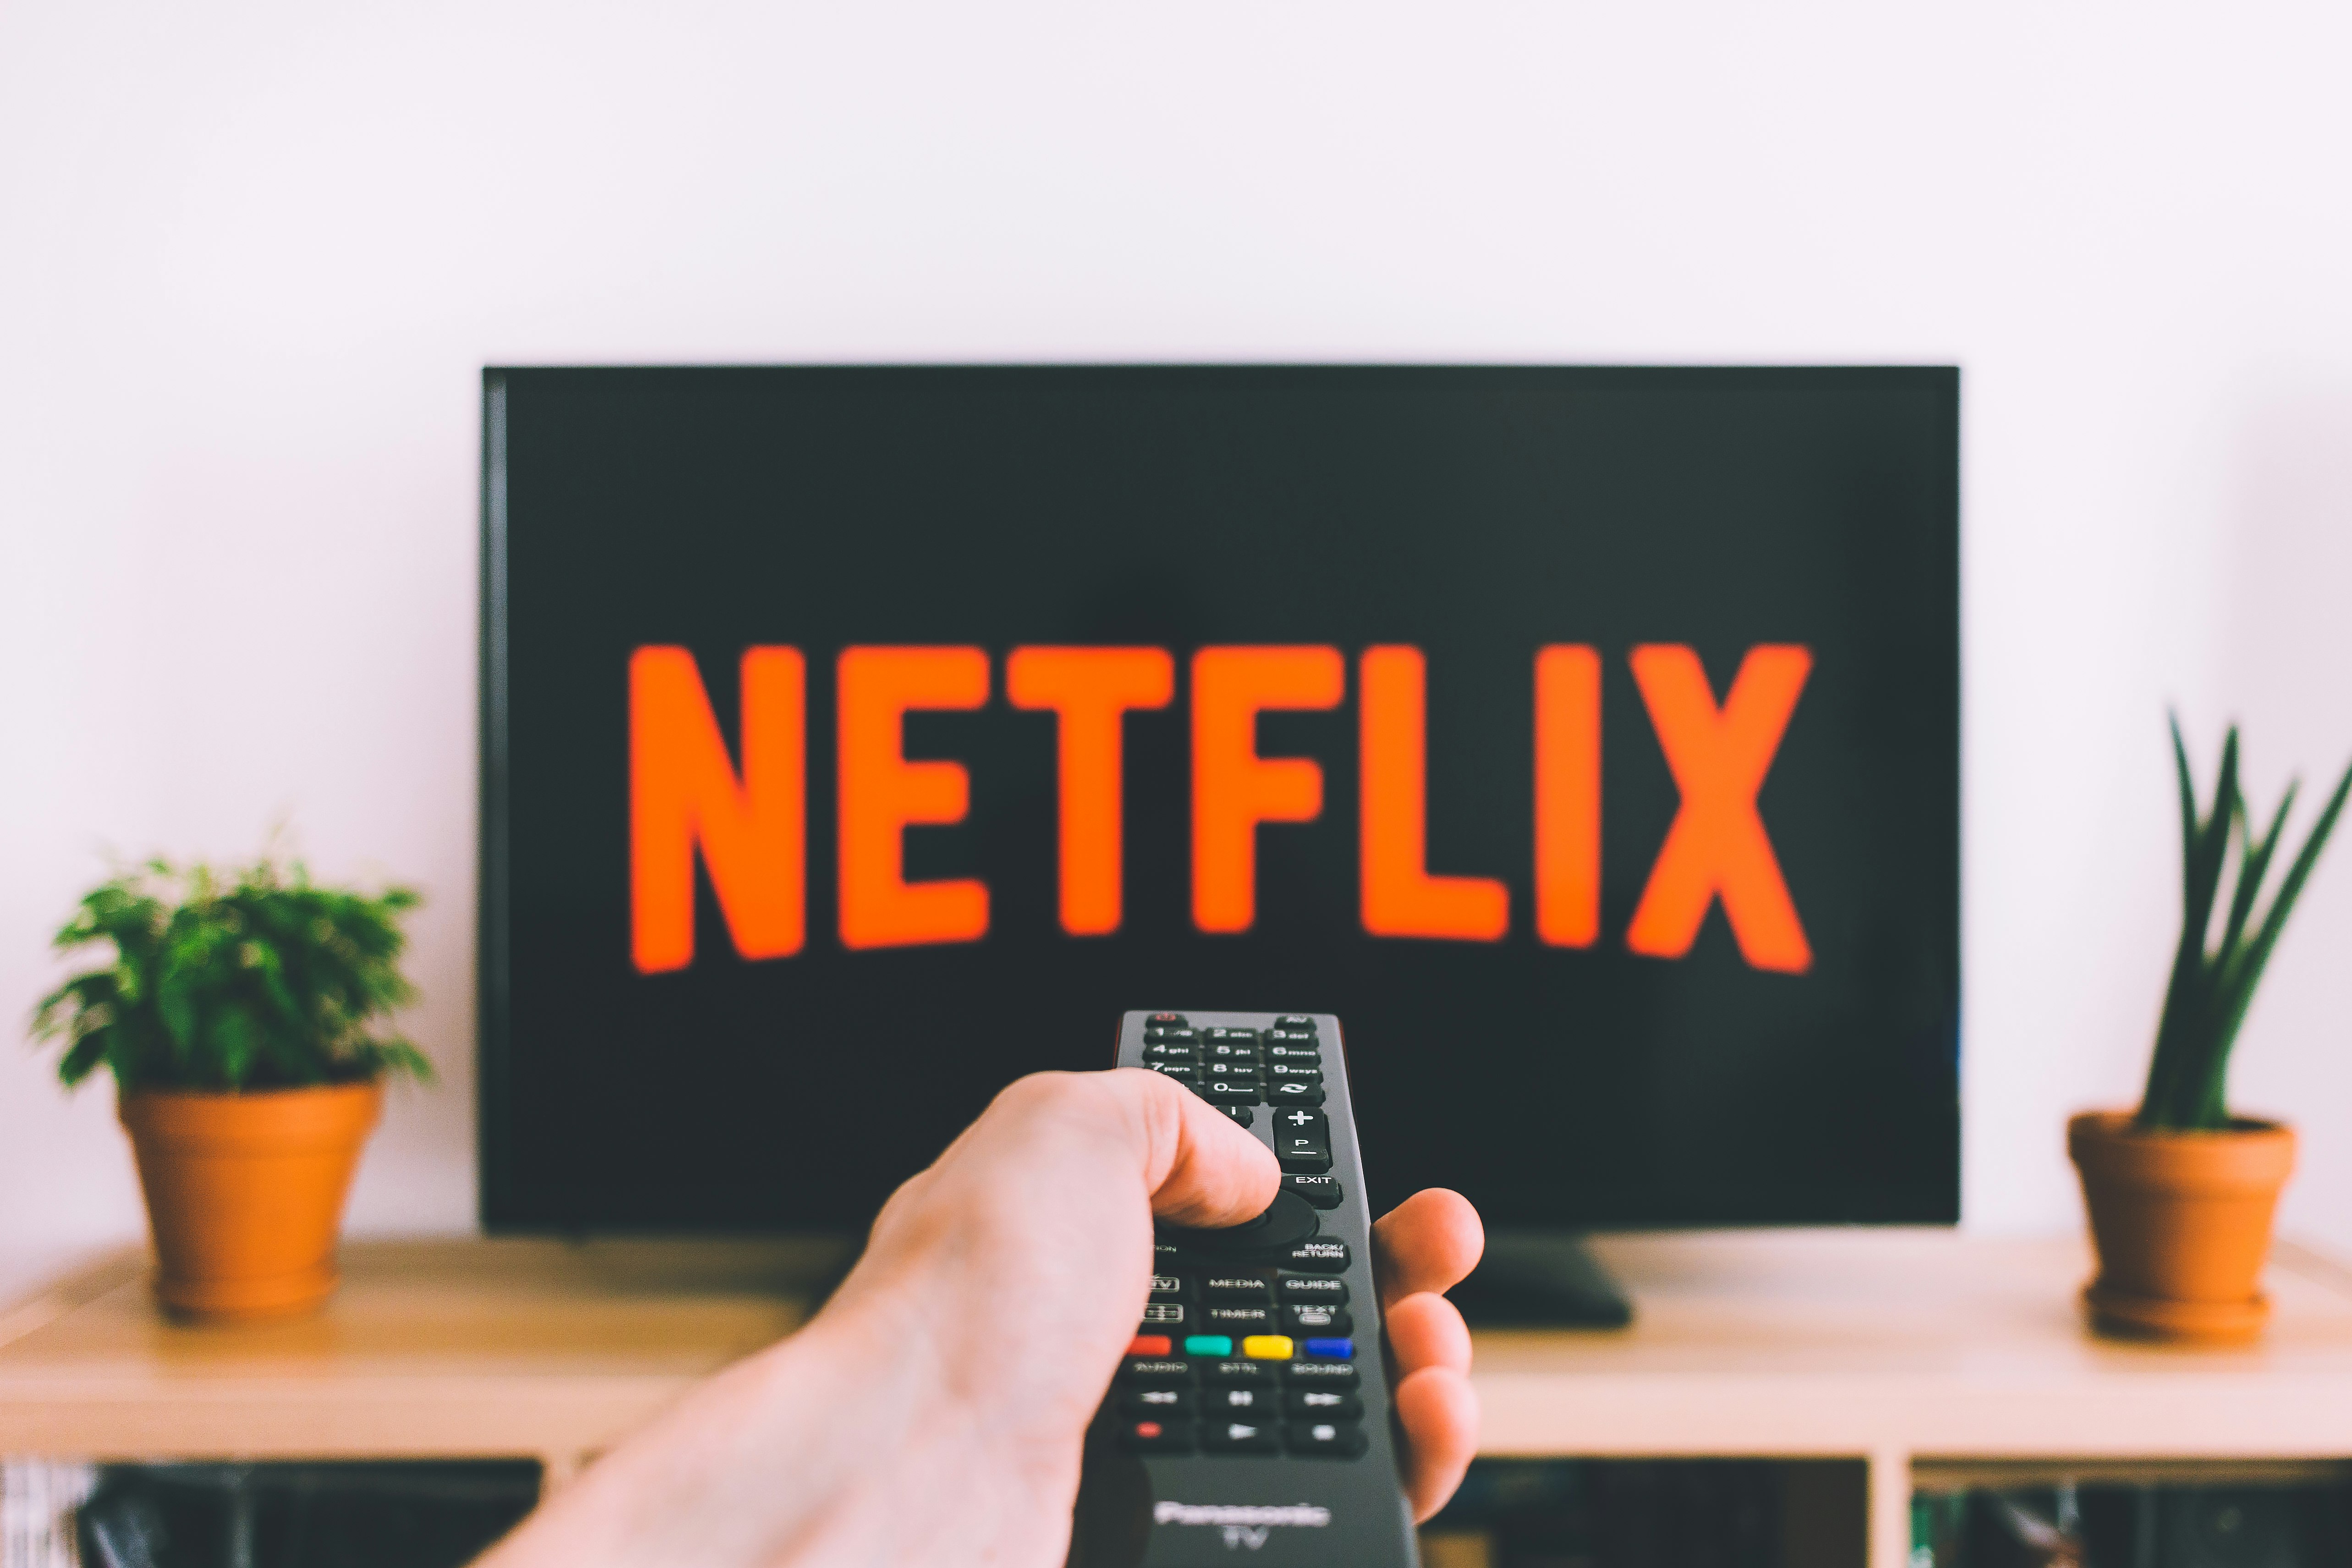 Netflix subscribers soar to half a billion